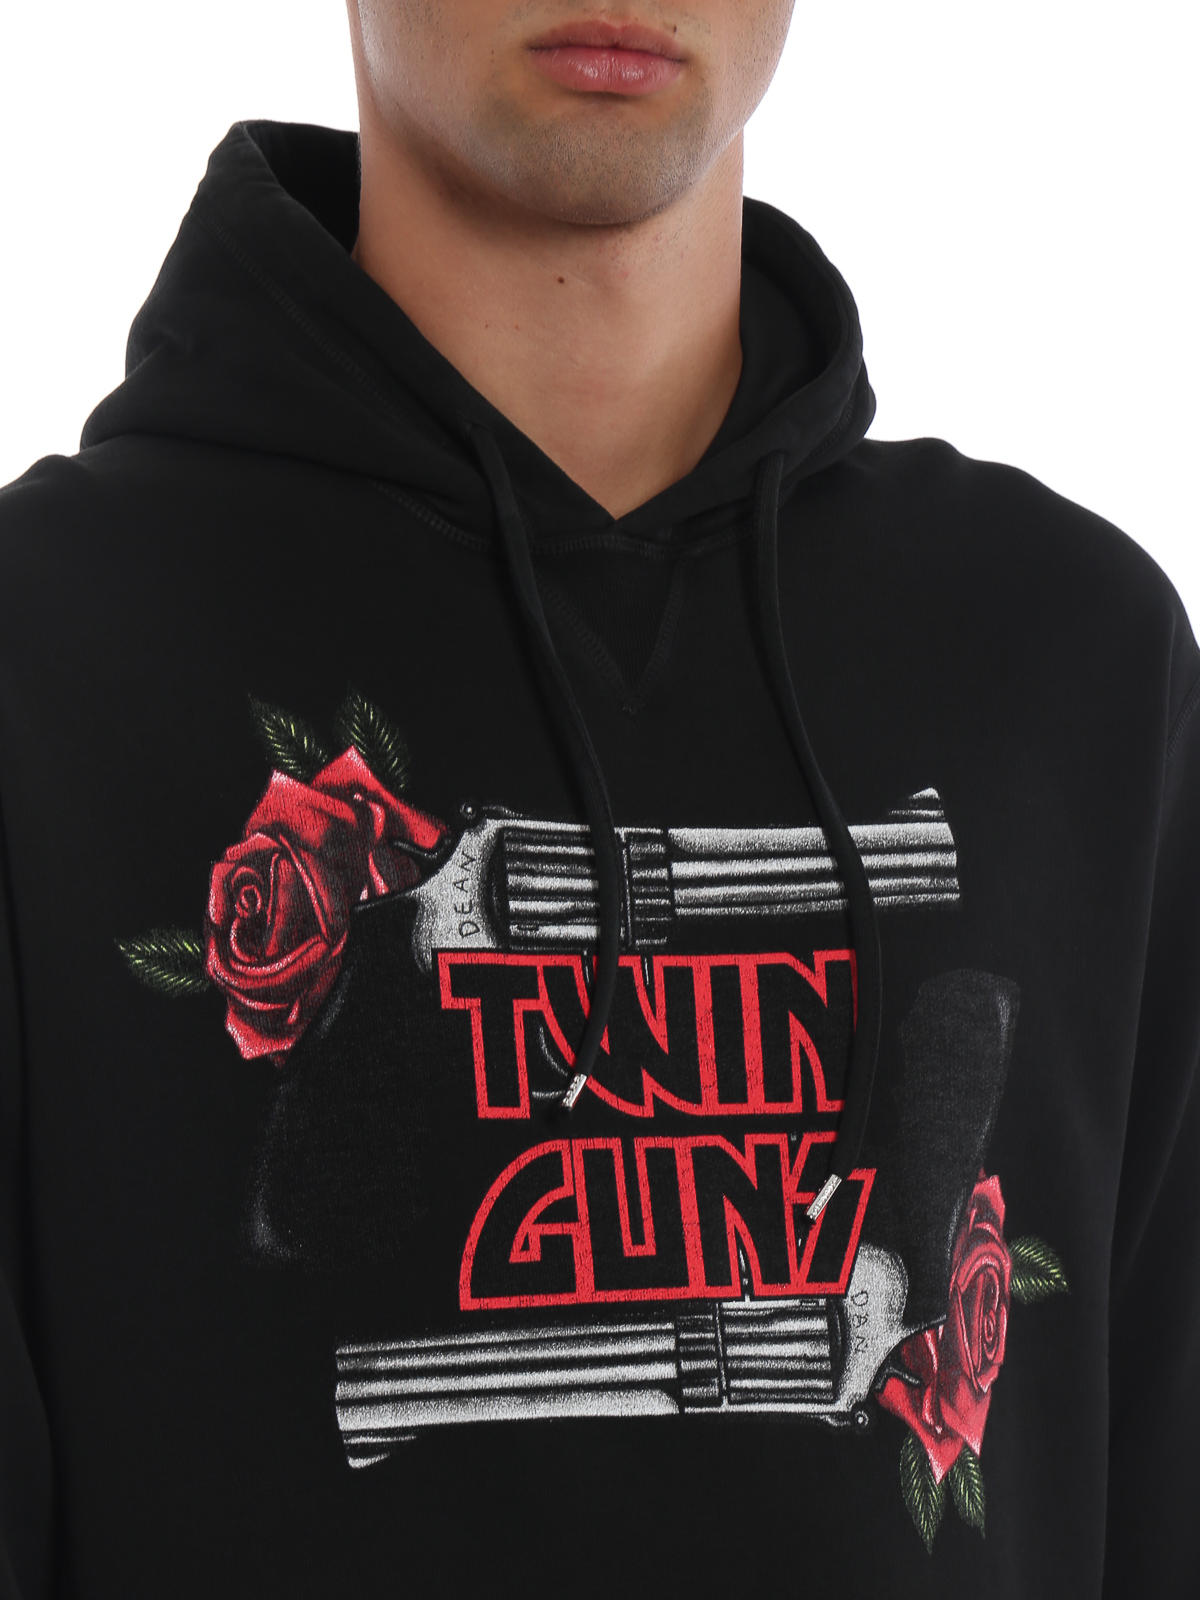 dsquared2 rose gun t shirt